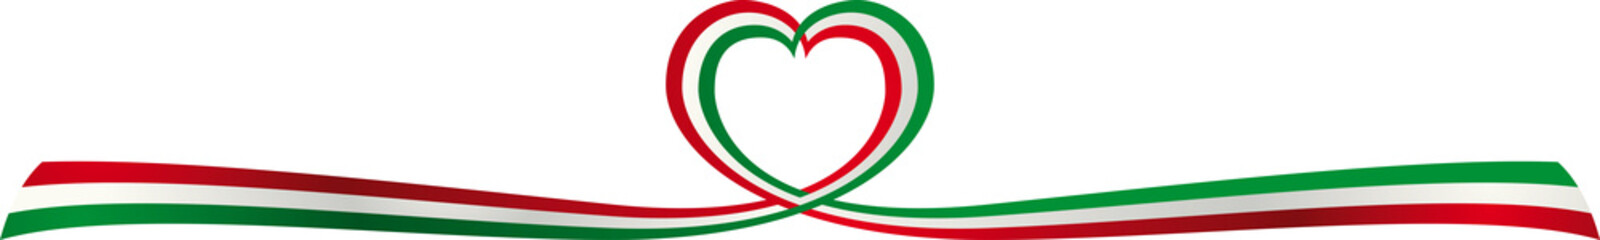 Banner nastro italia - love italy banner - 44286574